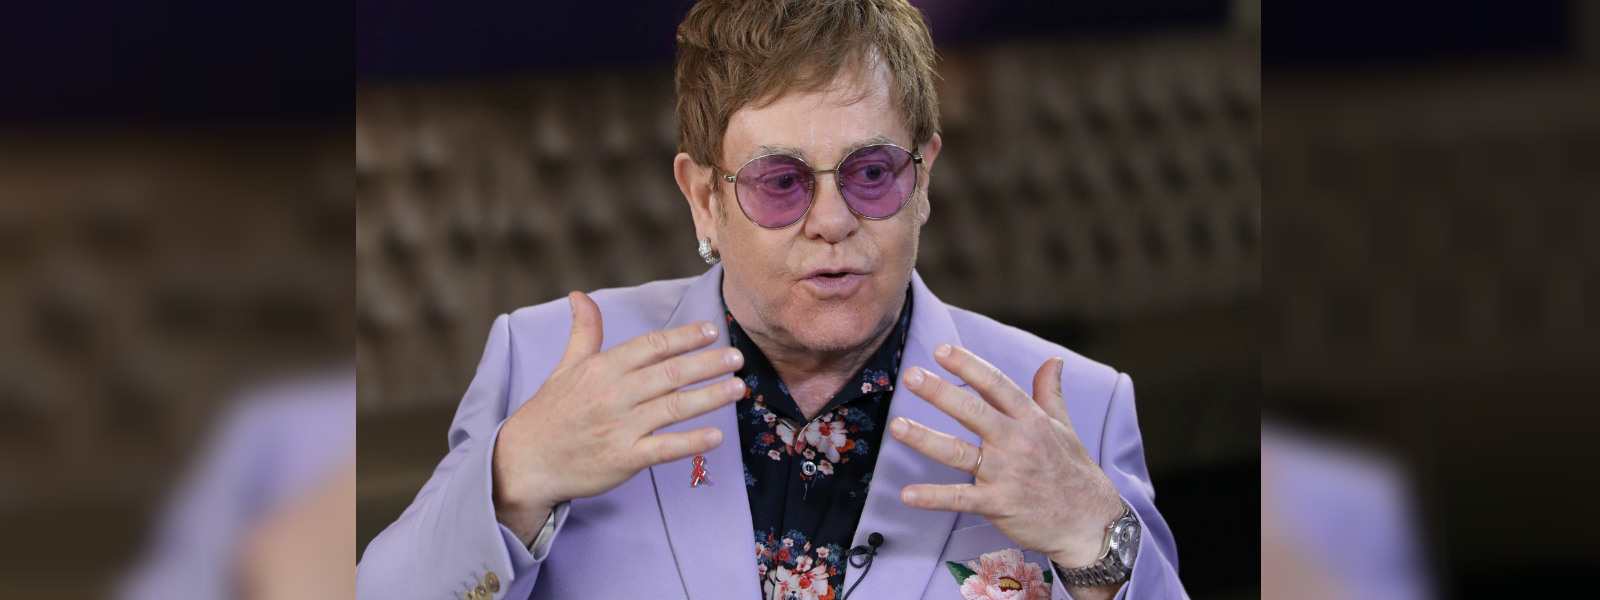 Elton John's 'Your Song' lyrics for auction